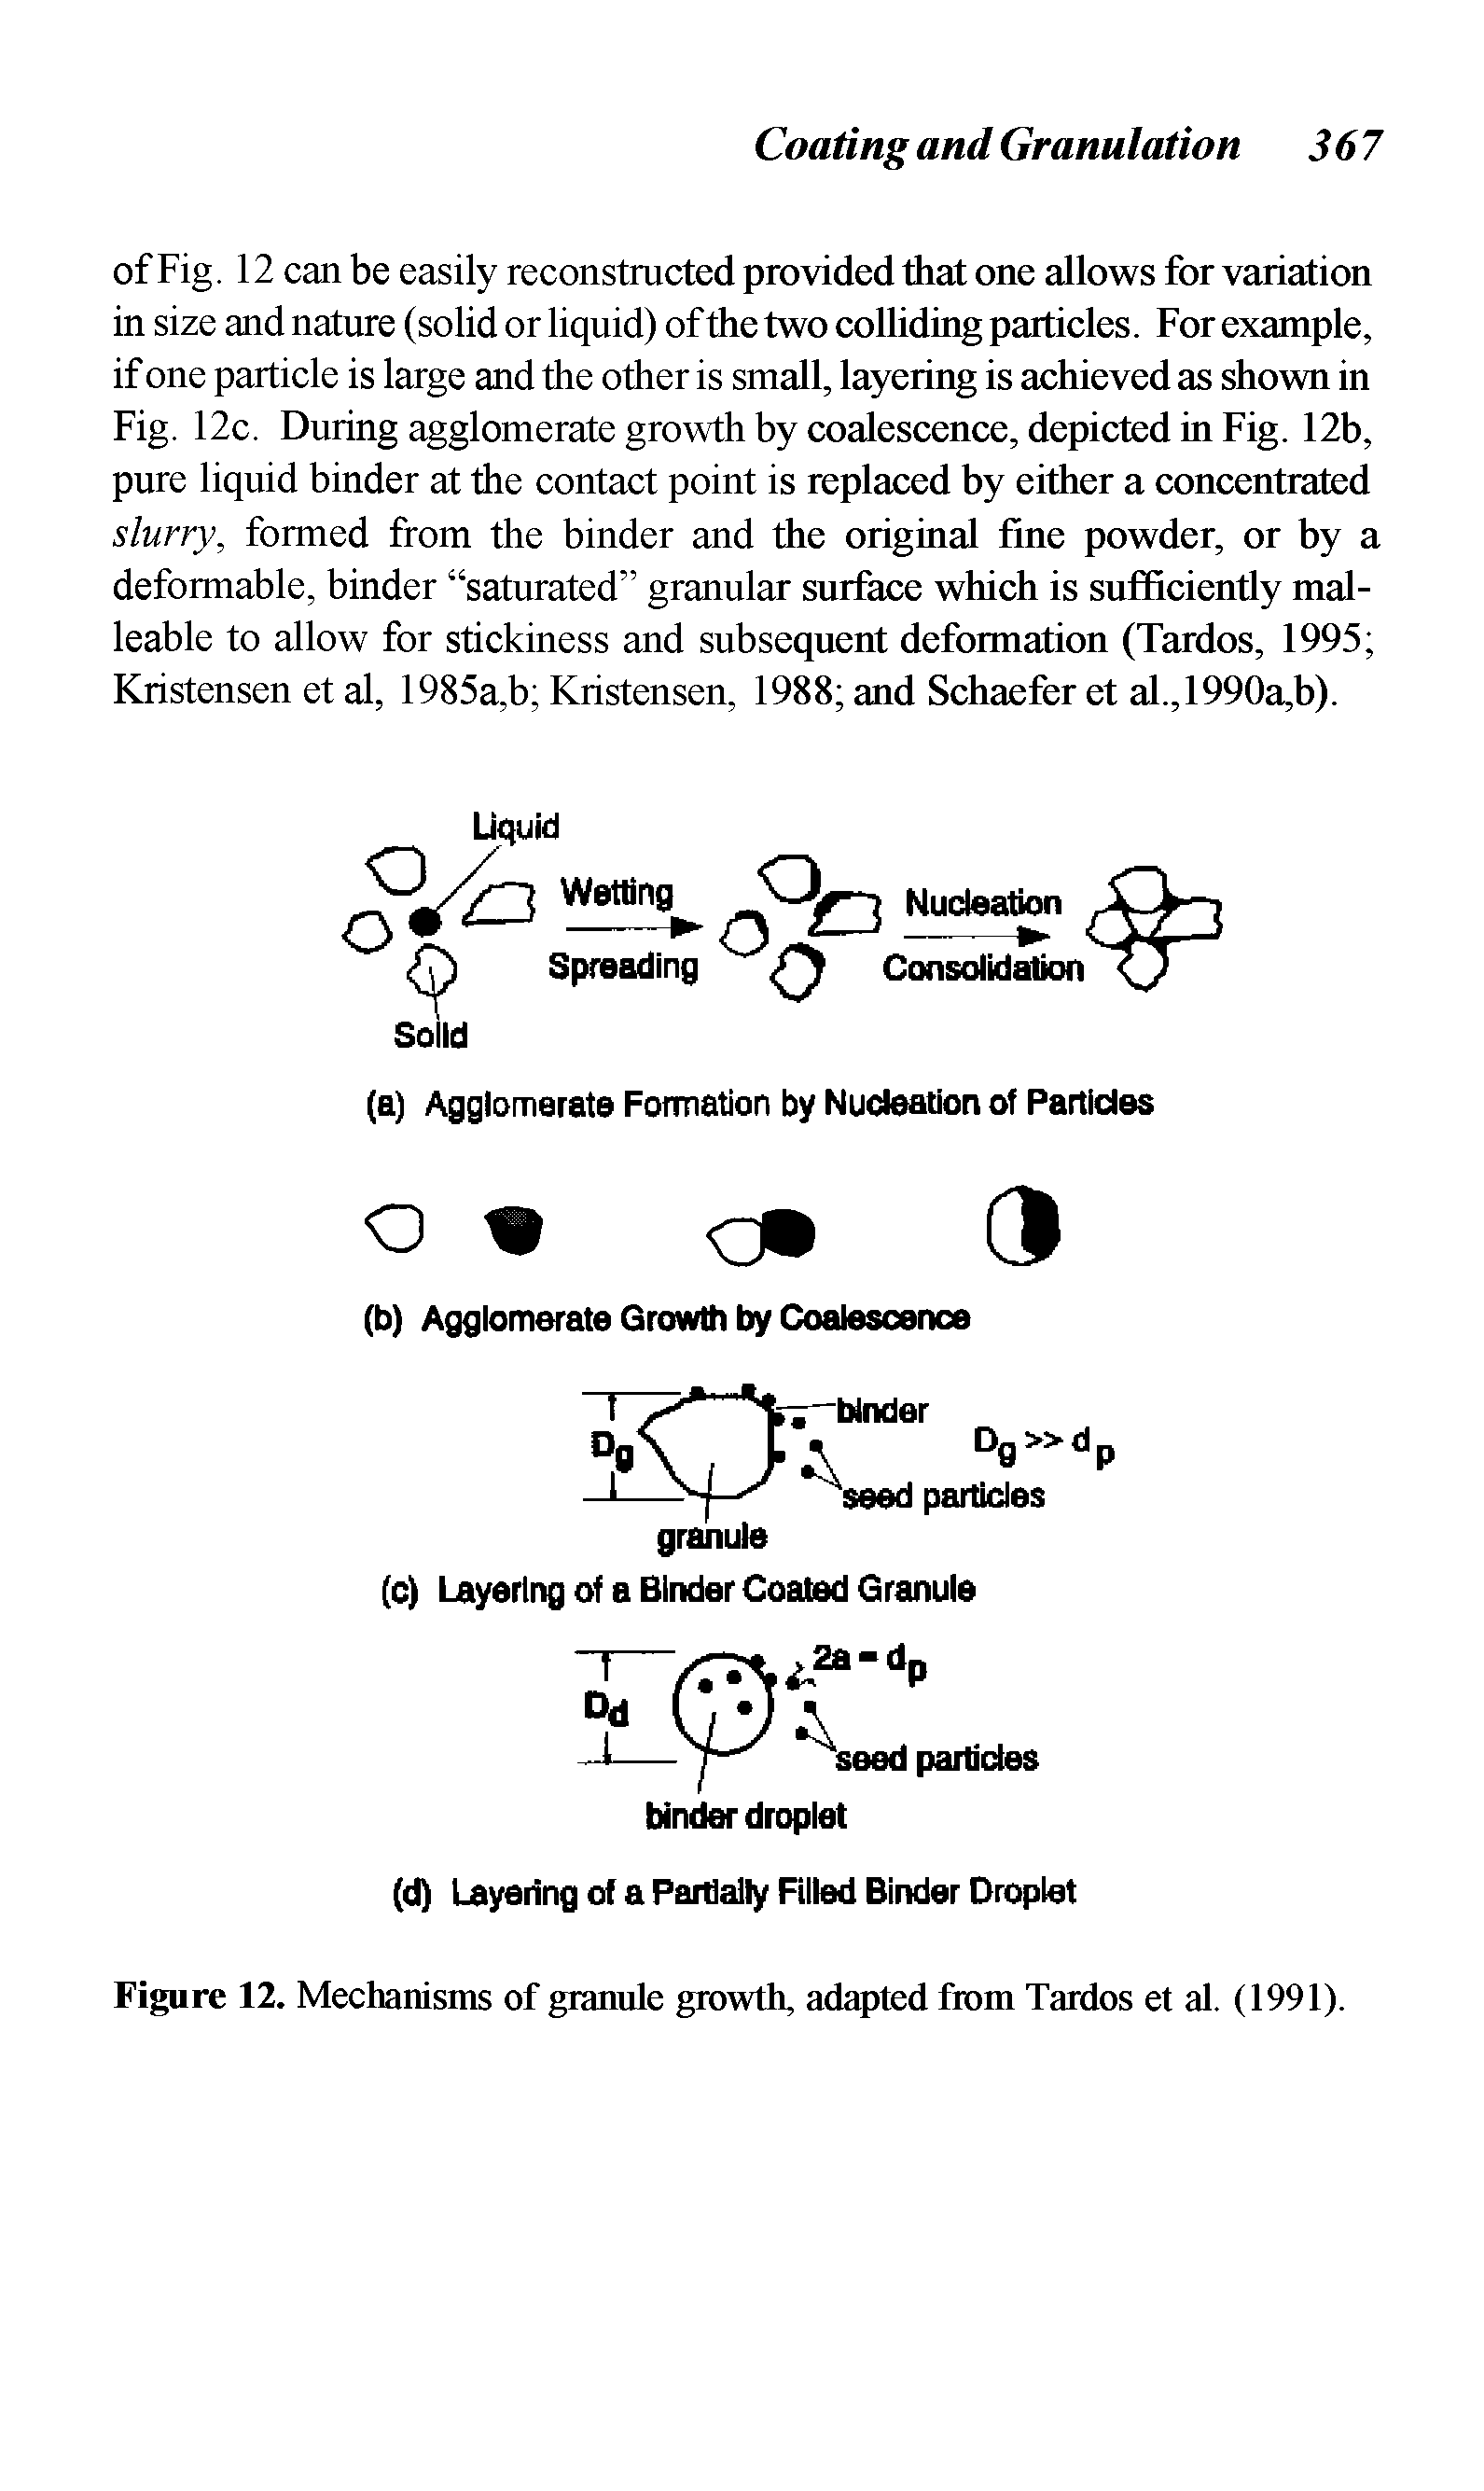 Figure 12. Mechanisms of granule growth, adapted from Tardos et al. (1991).